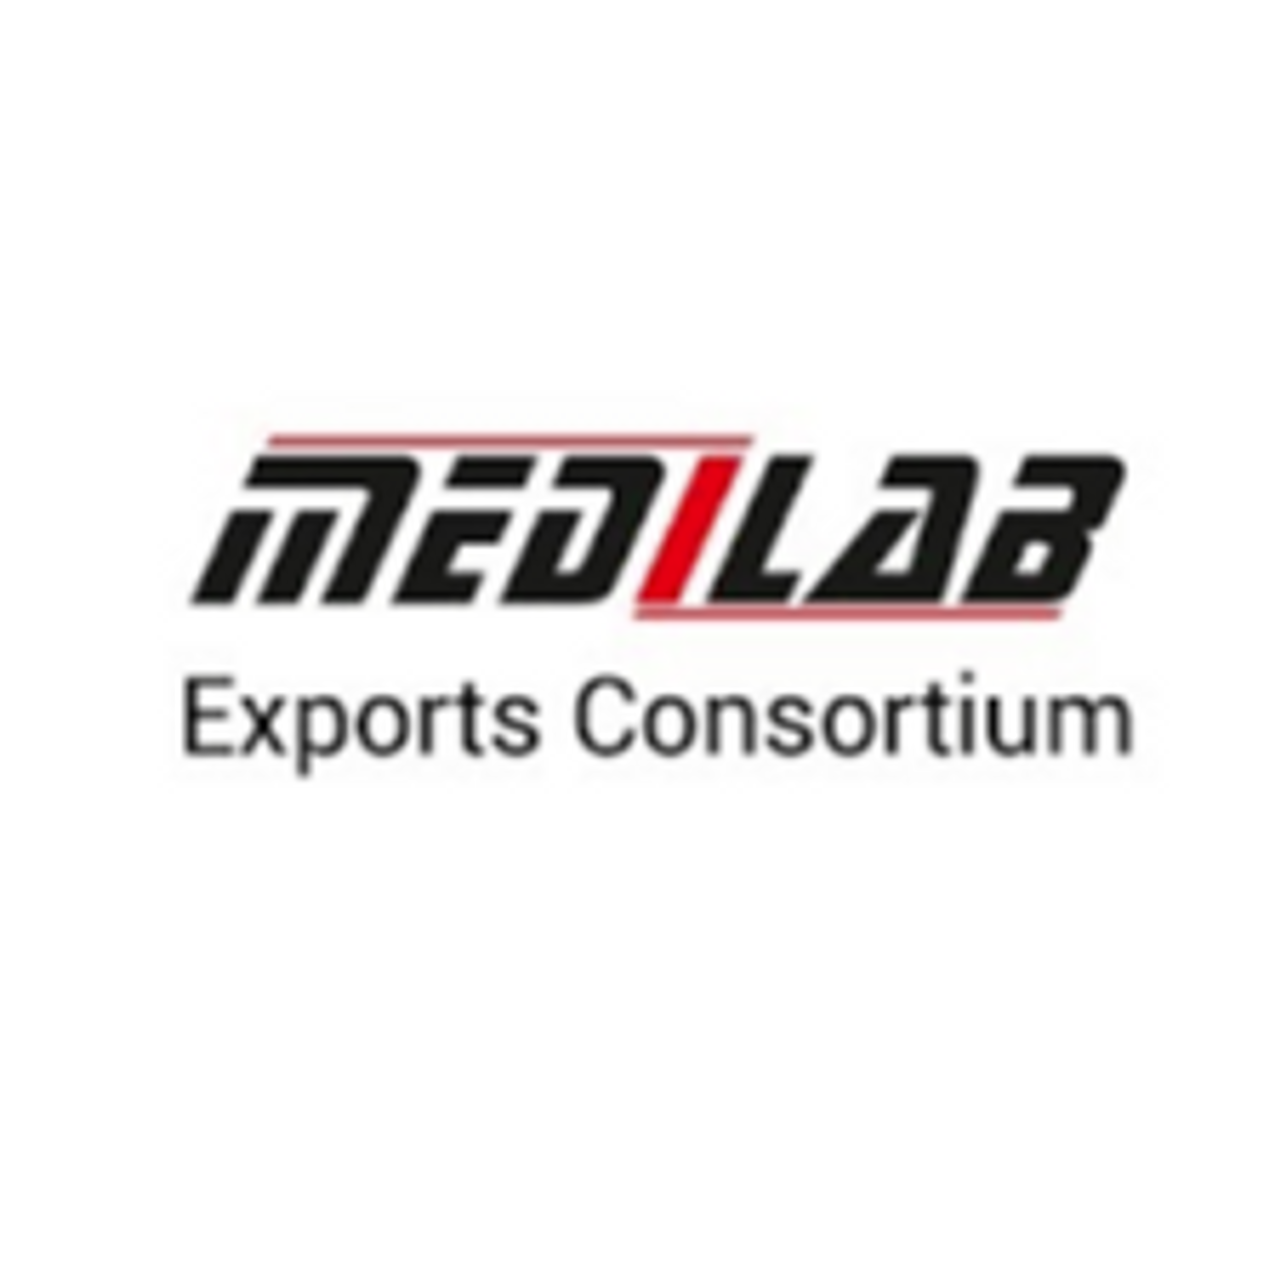 medilabexports